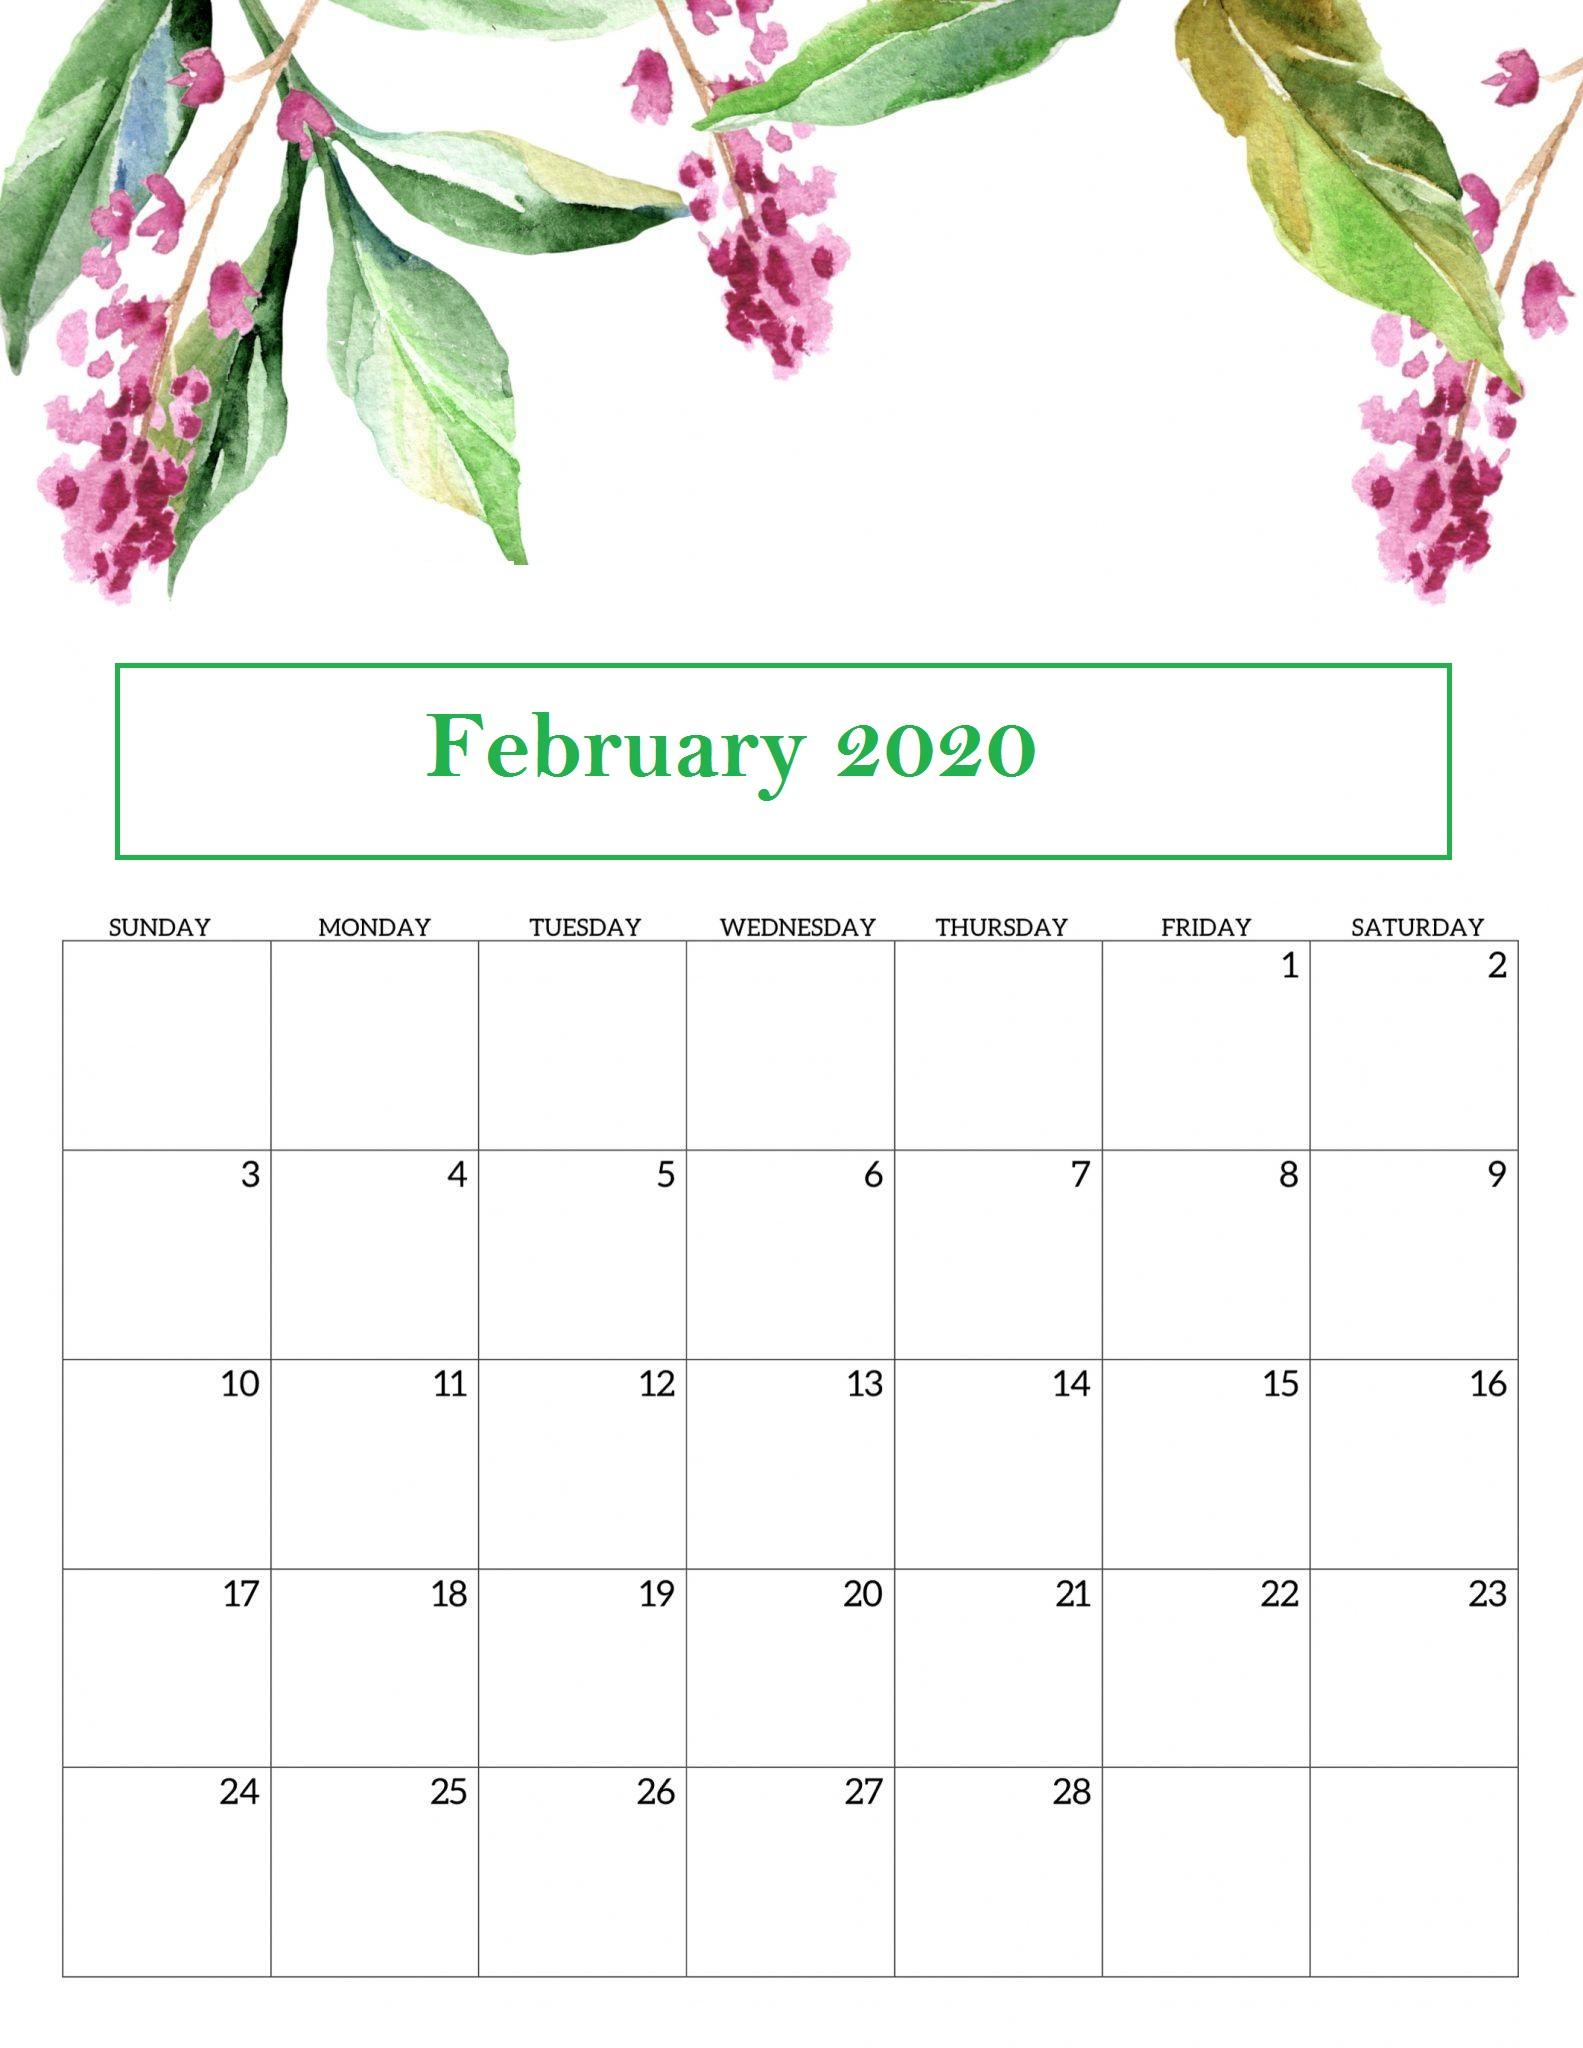 Floral February 2020 Calendar Wallpaper For Desktop, iPhone, Laptop